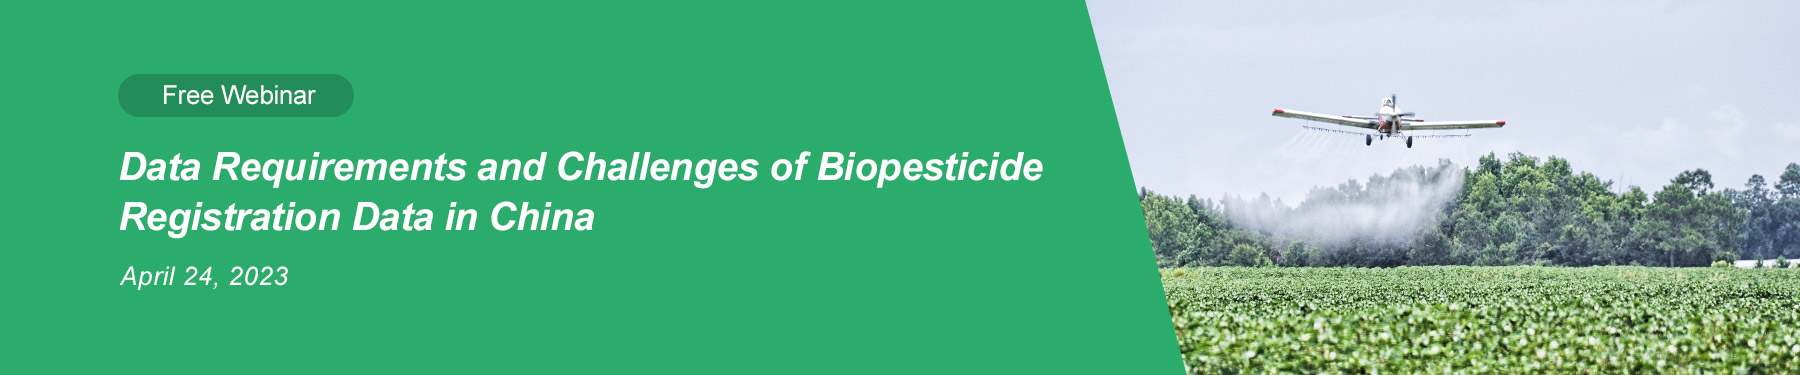 Free,Webinar,Pesticide,Biopesticide,Registration,Requirements,China